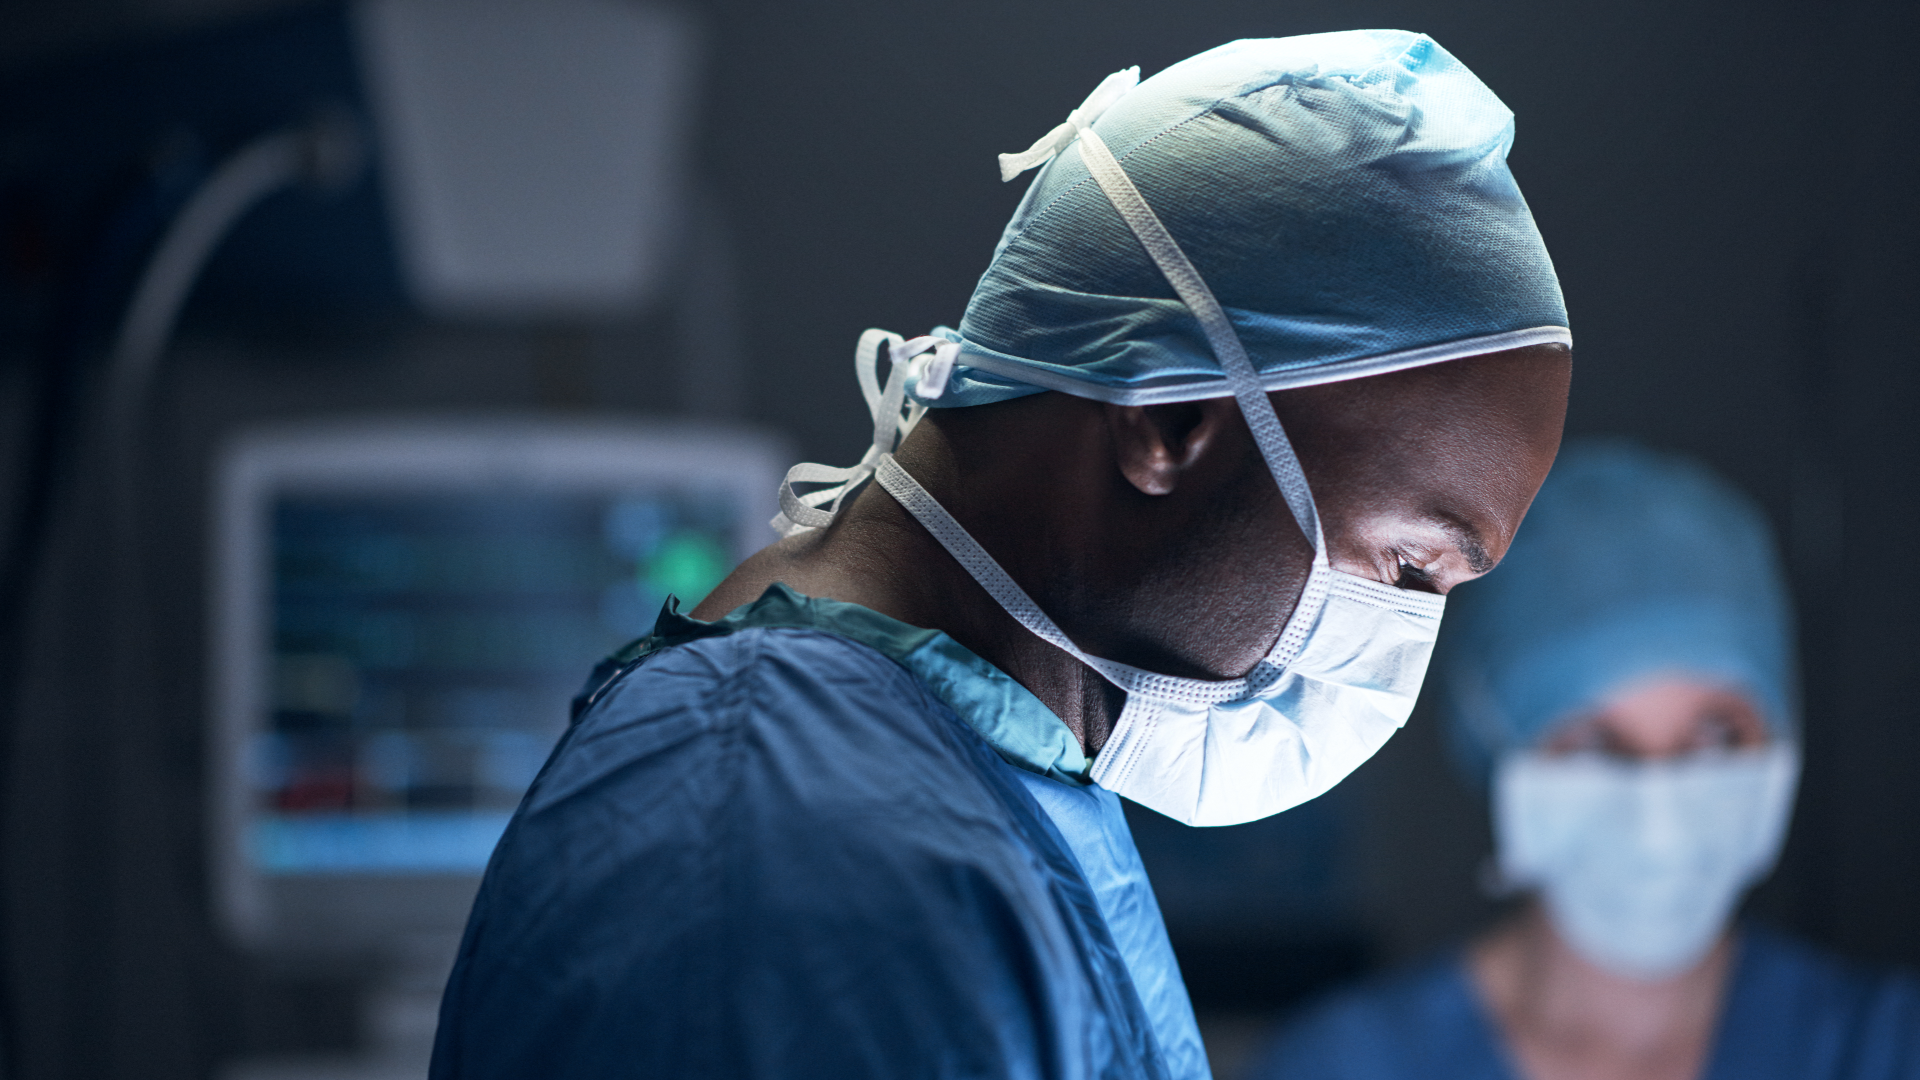 Black Surgeon Braids Patient's Natural Hair Before Surgery